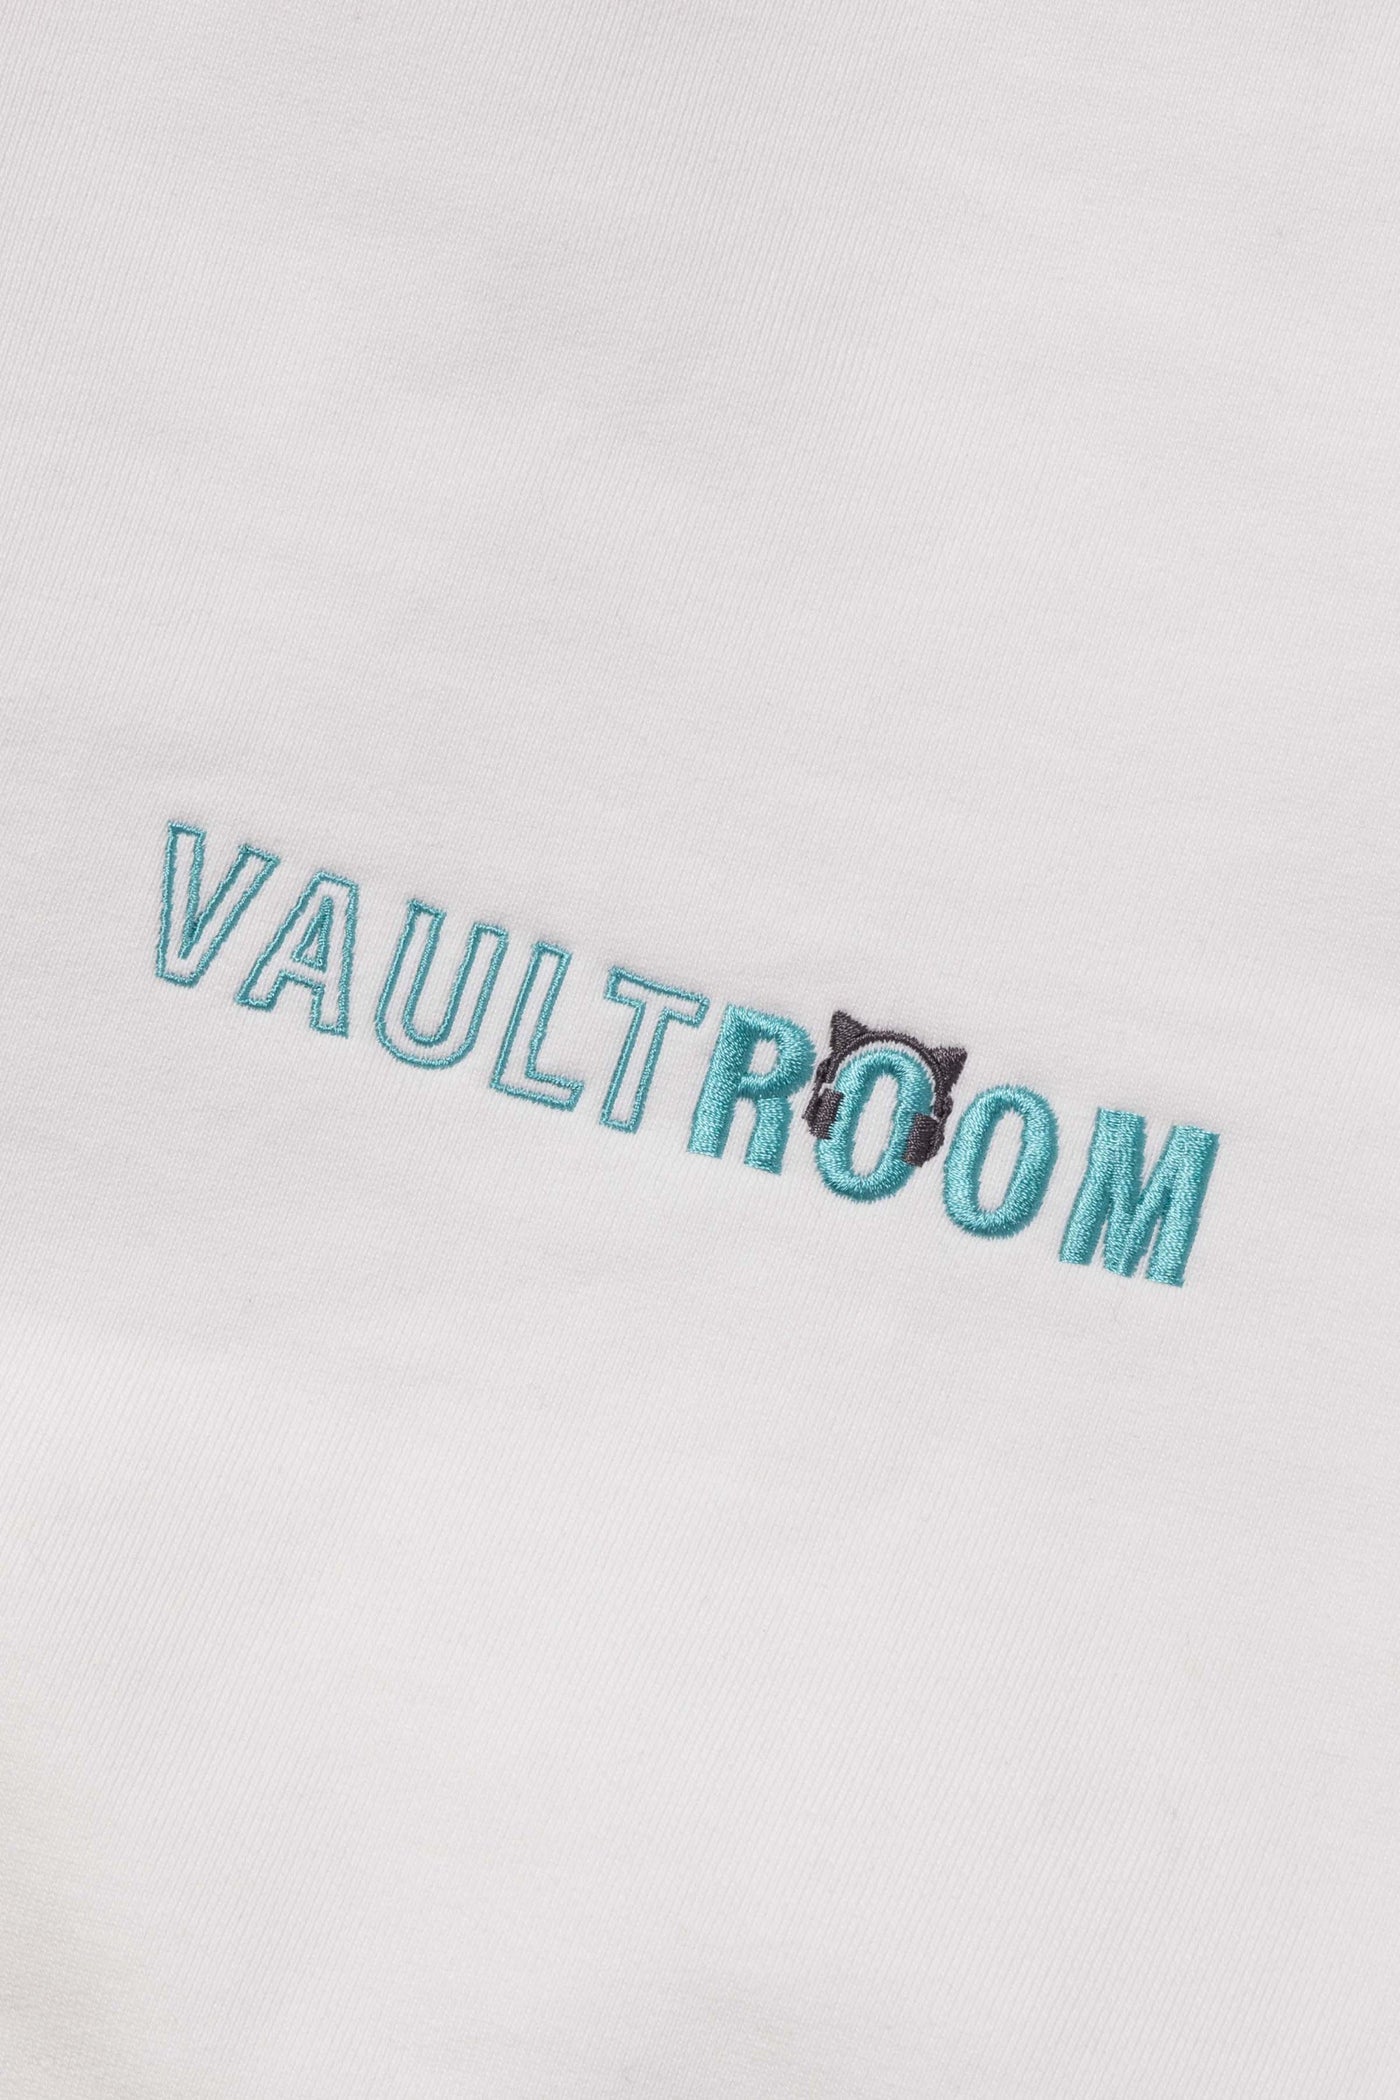 vault【XL】vaultroom NEKOMUGI TORORO HOODIE